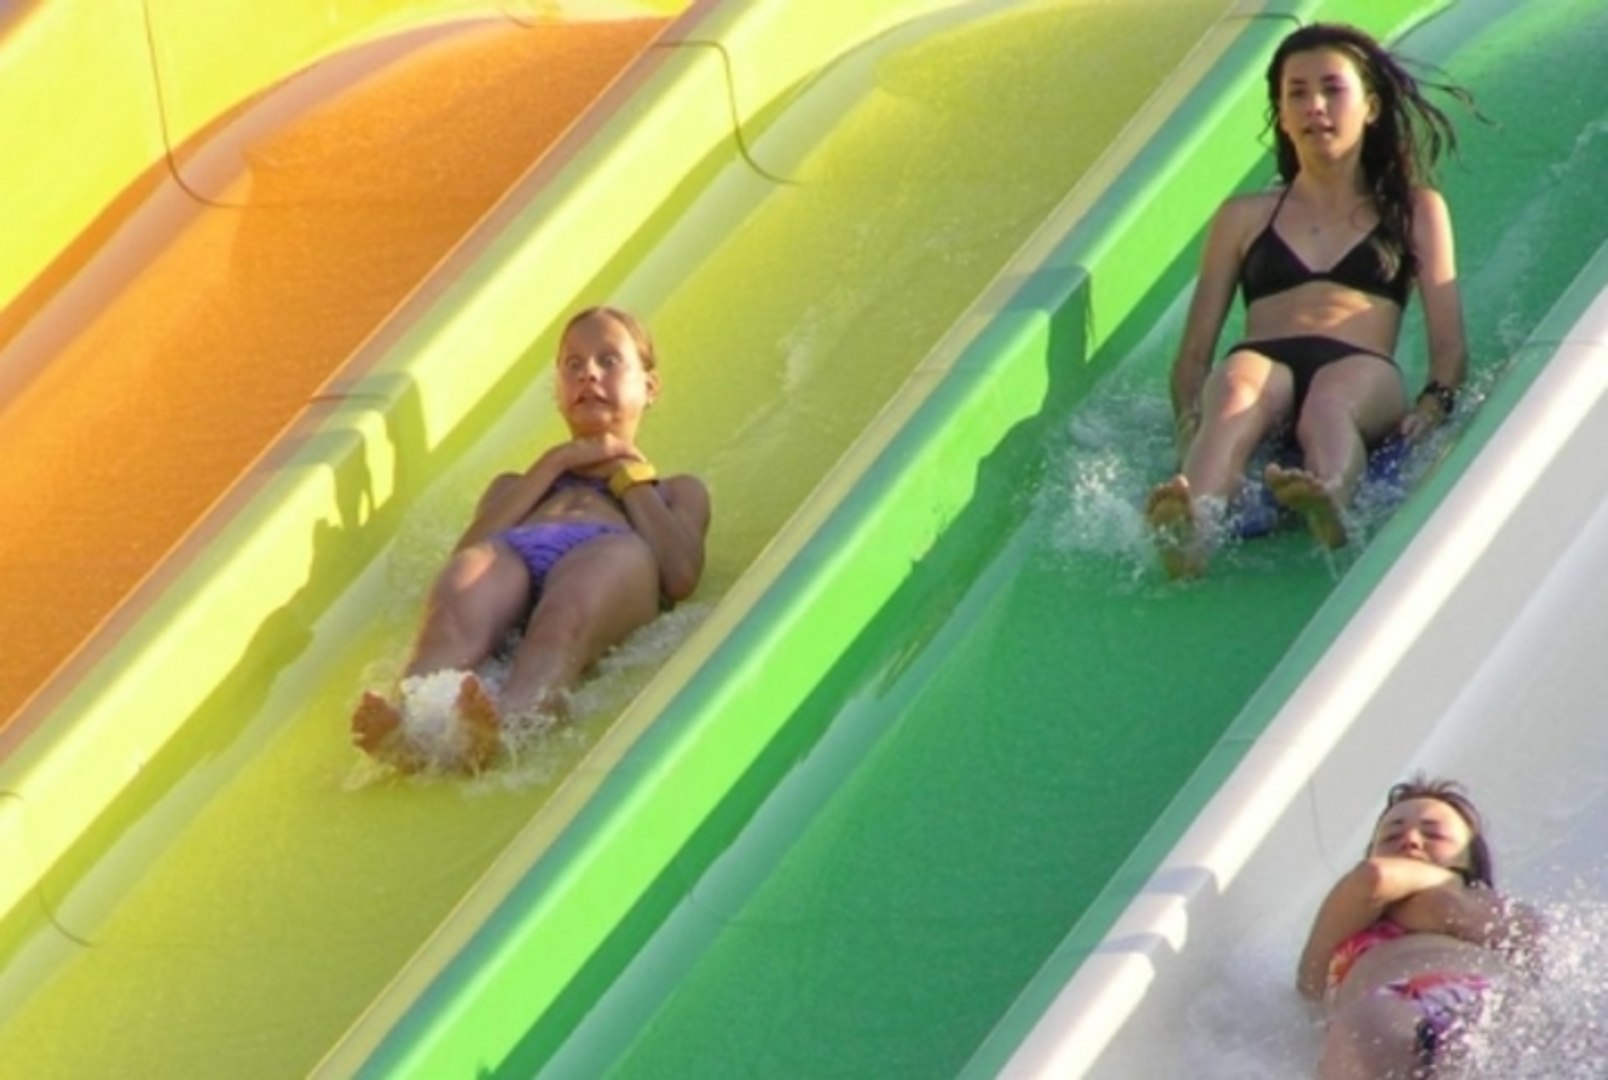 daniel buss recommends water park bathing suit malfunction pic